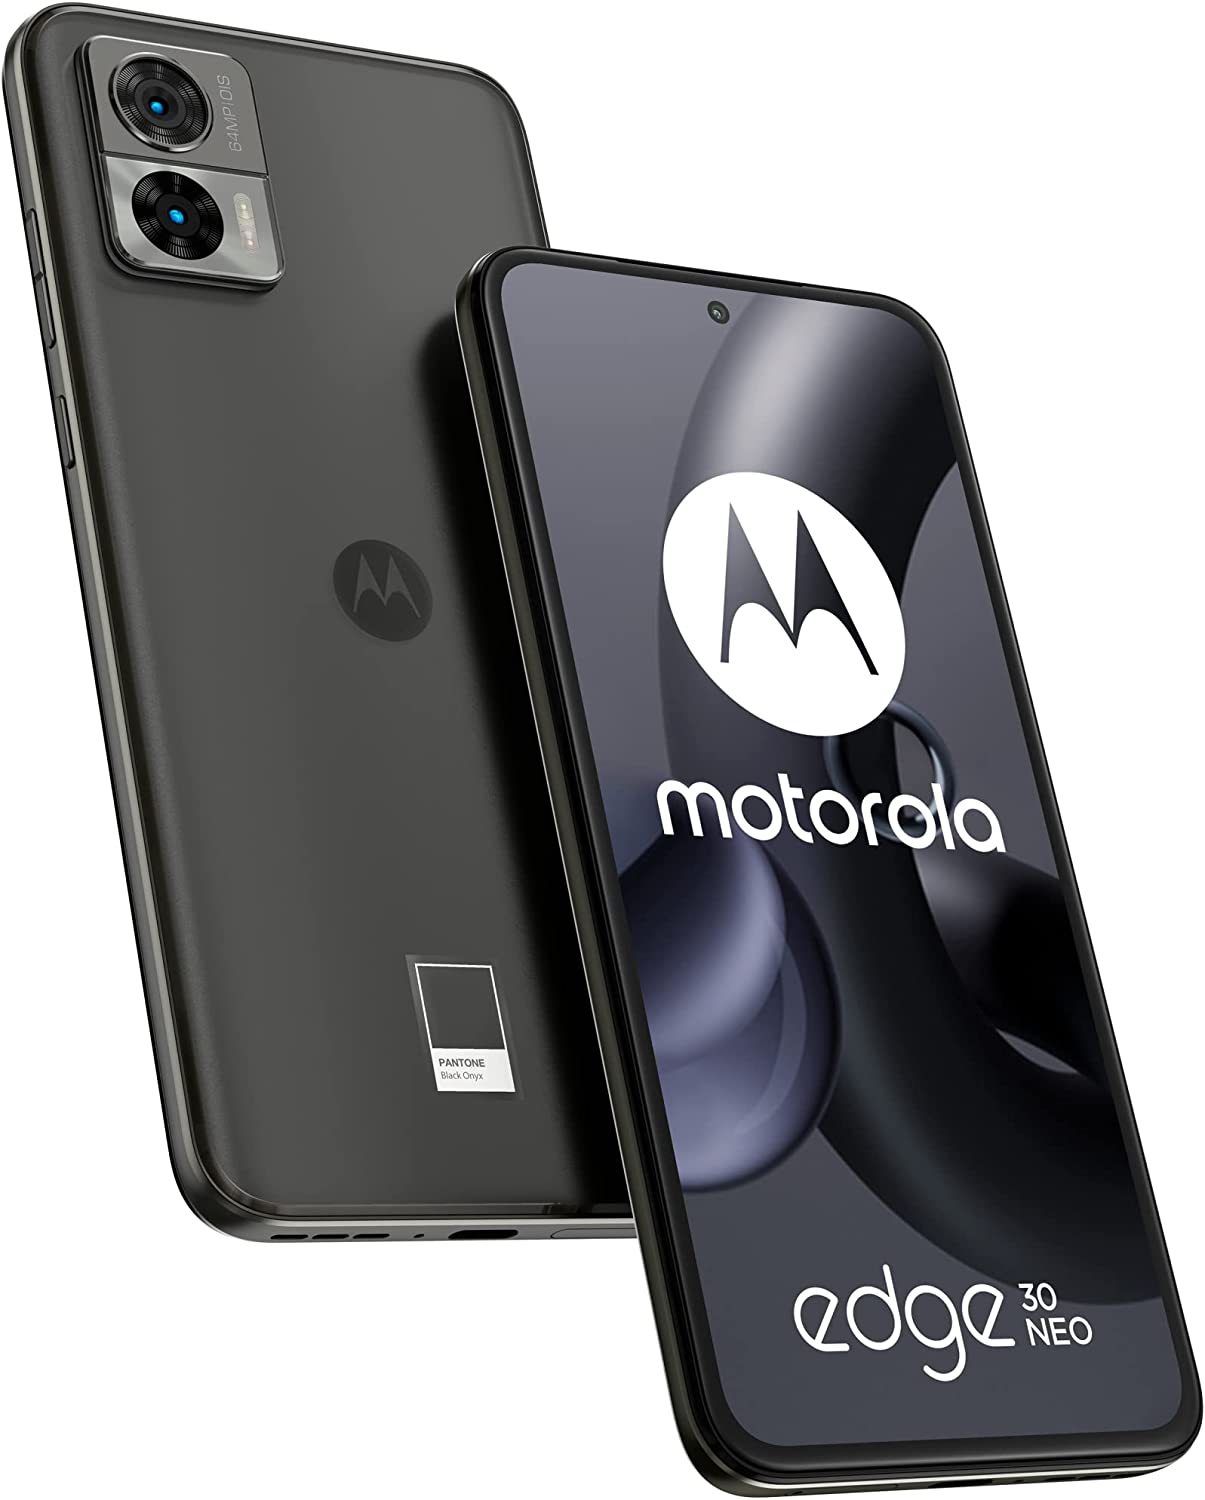 Motorola Edge 30 Neo prezzo: da Euronics in offerta a 329 euro